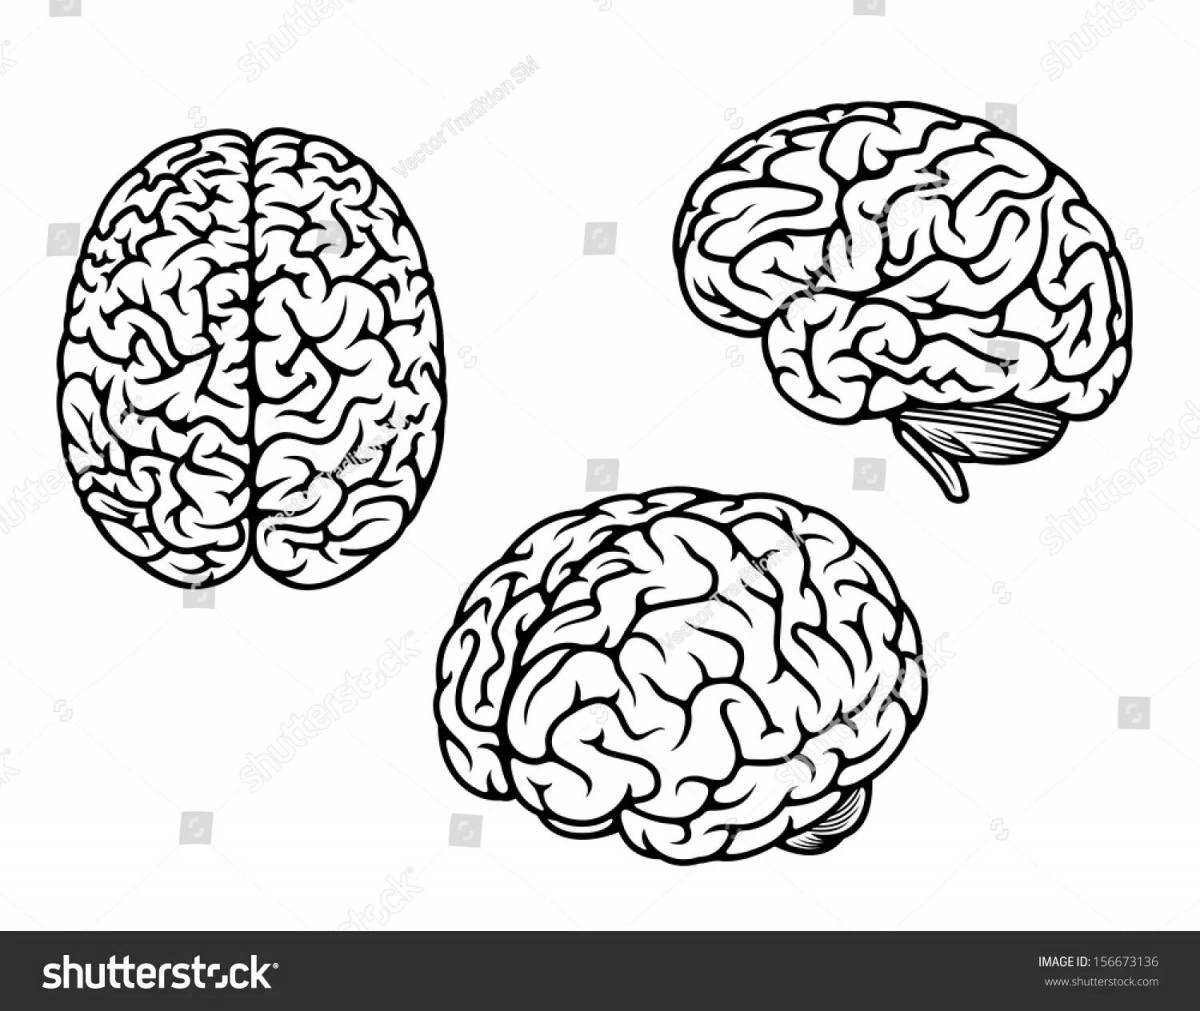 Human brain for kids #15